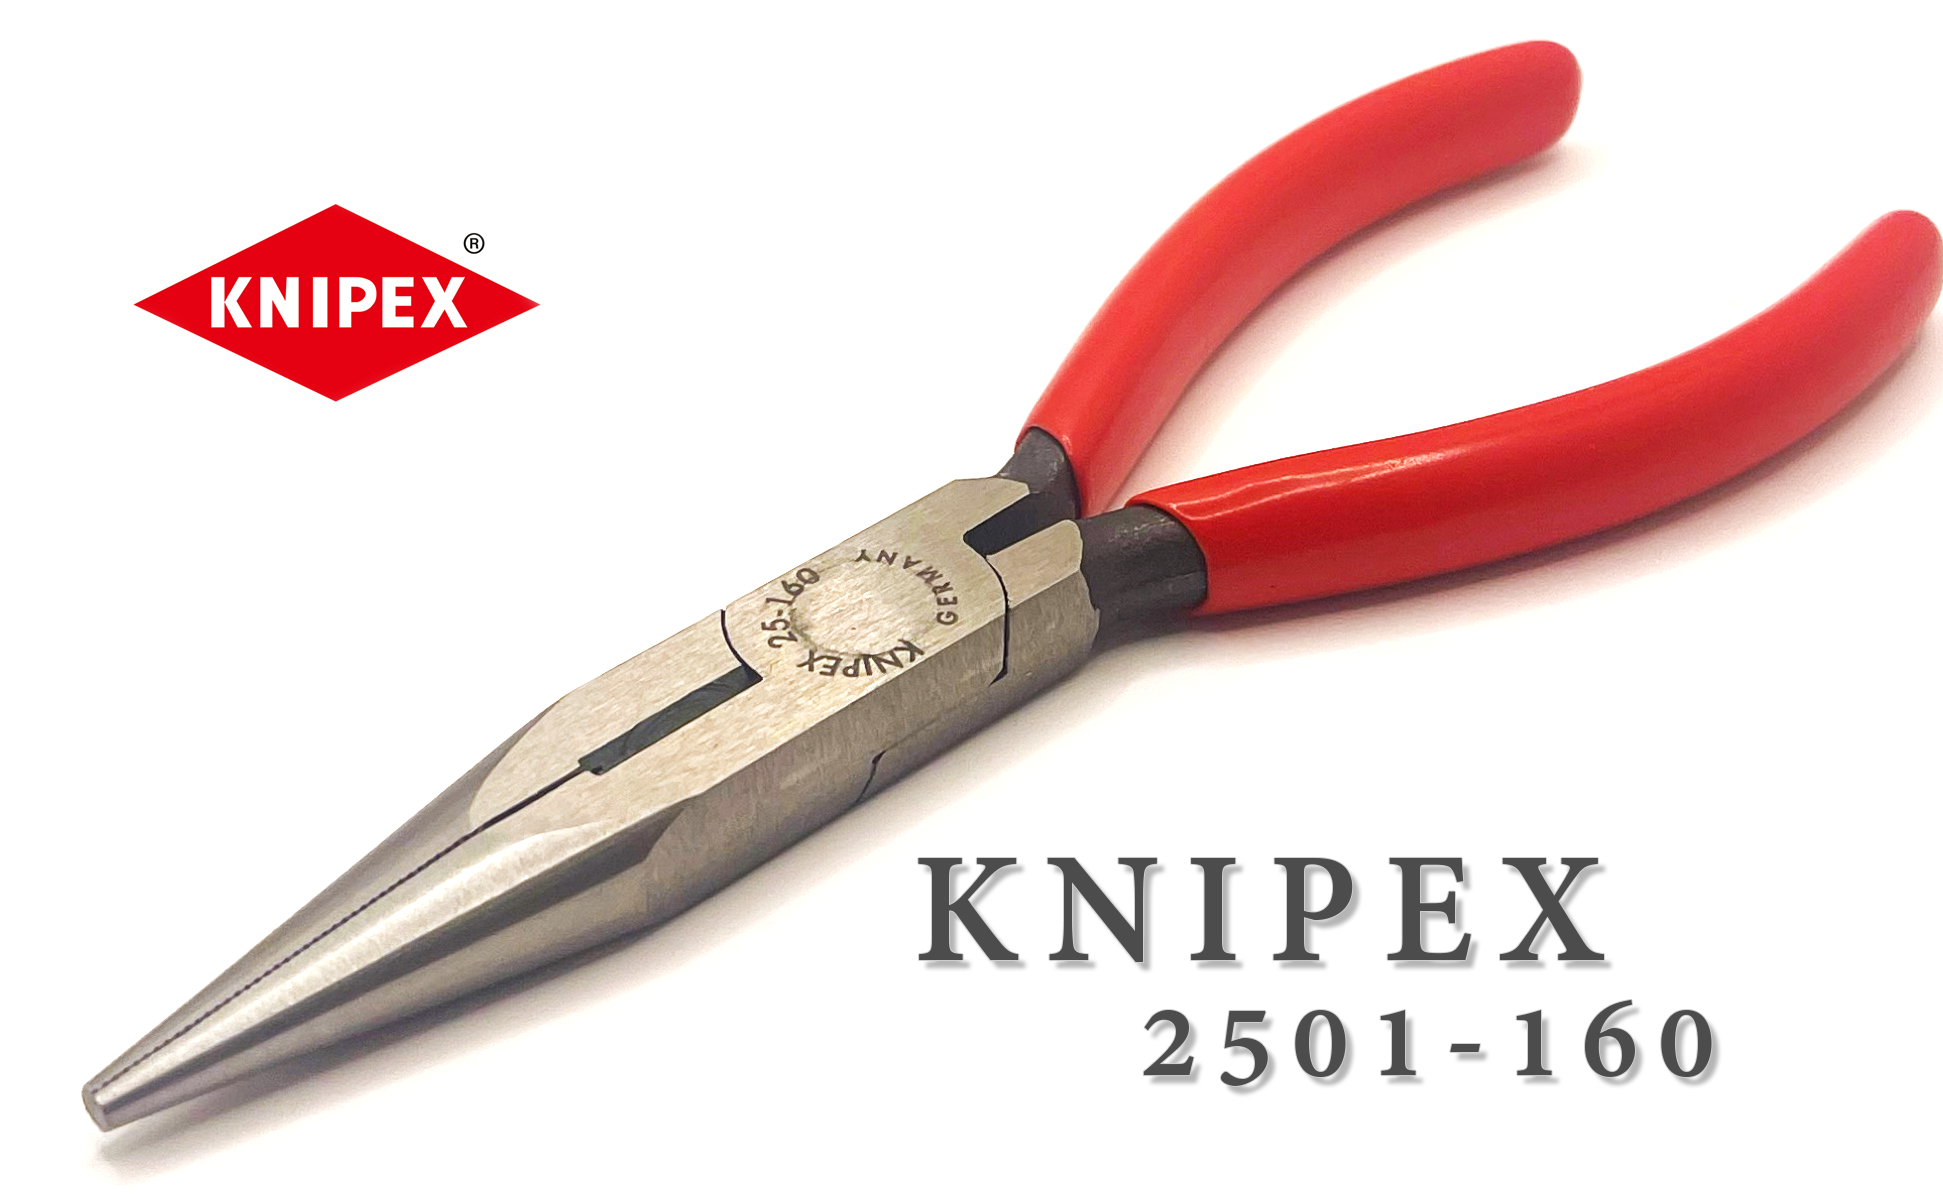 KNIPEX(クニペックス) 1301-160 電気技師用ペンチ (SB)並行輸入